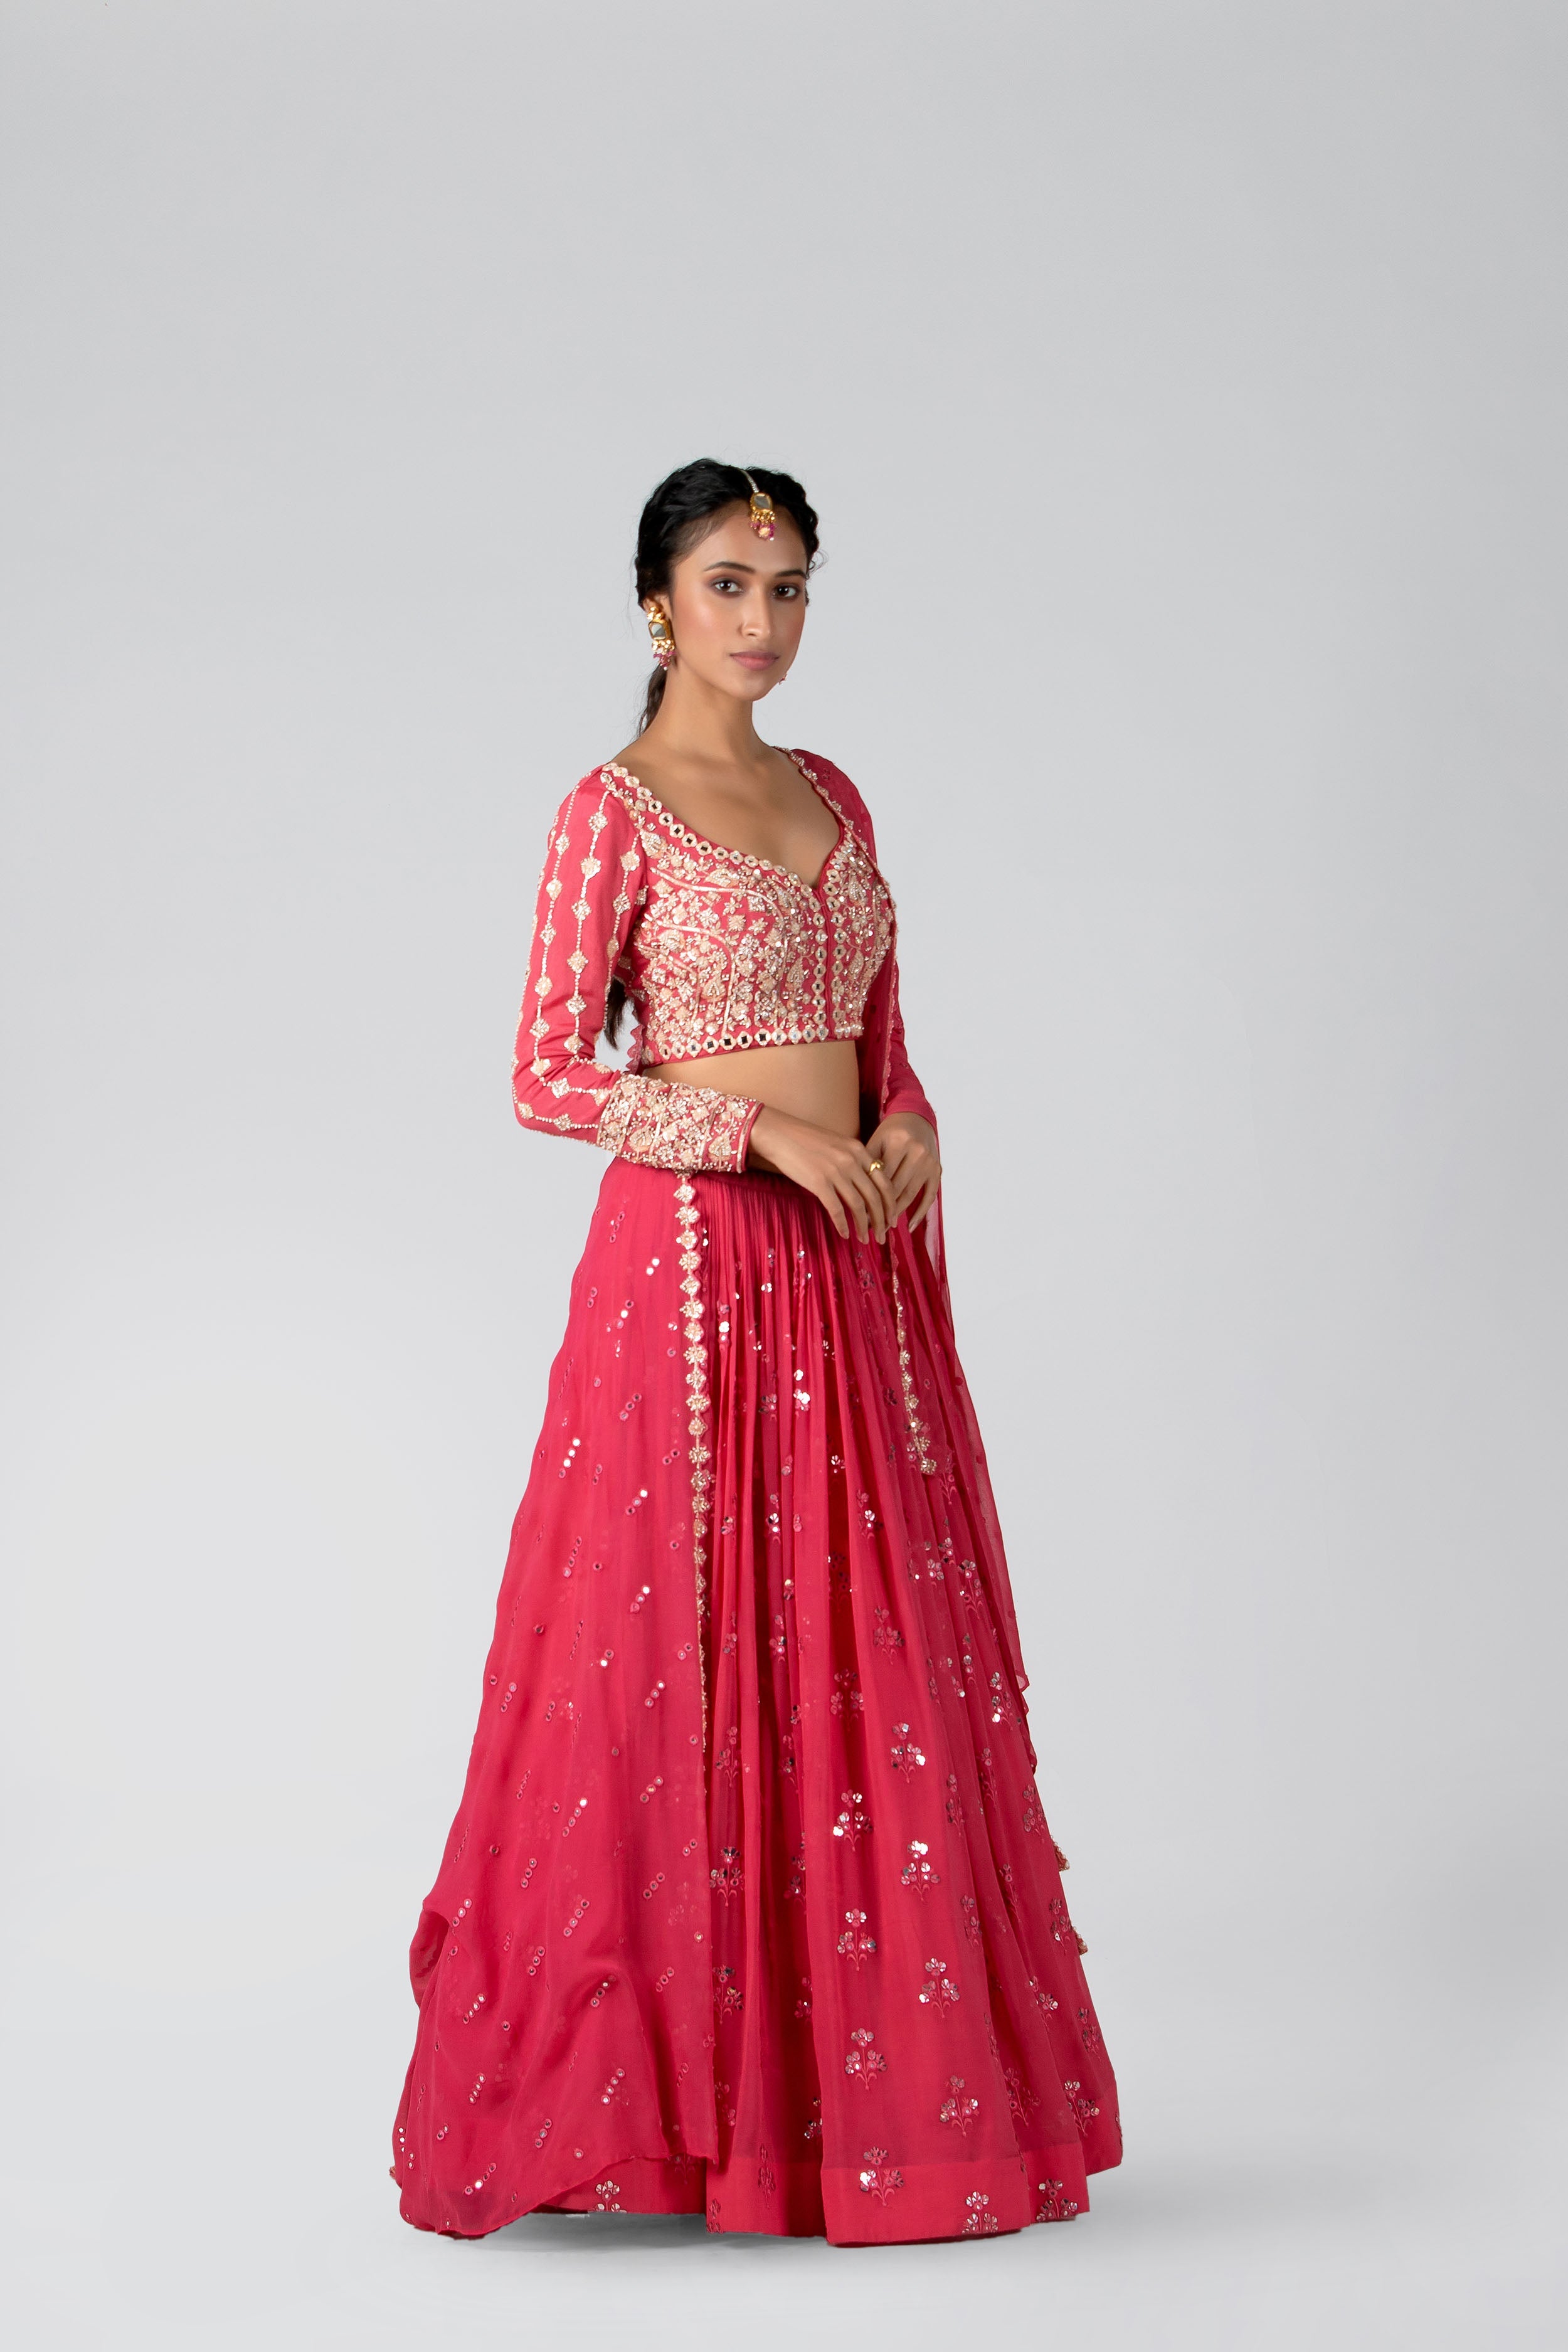 Suruchi Parakh - Candy Pink Georgette Skirt Set